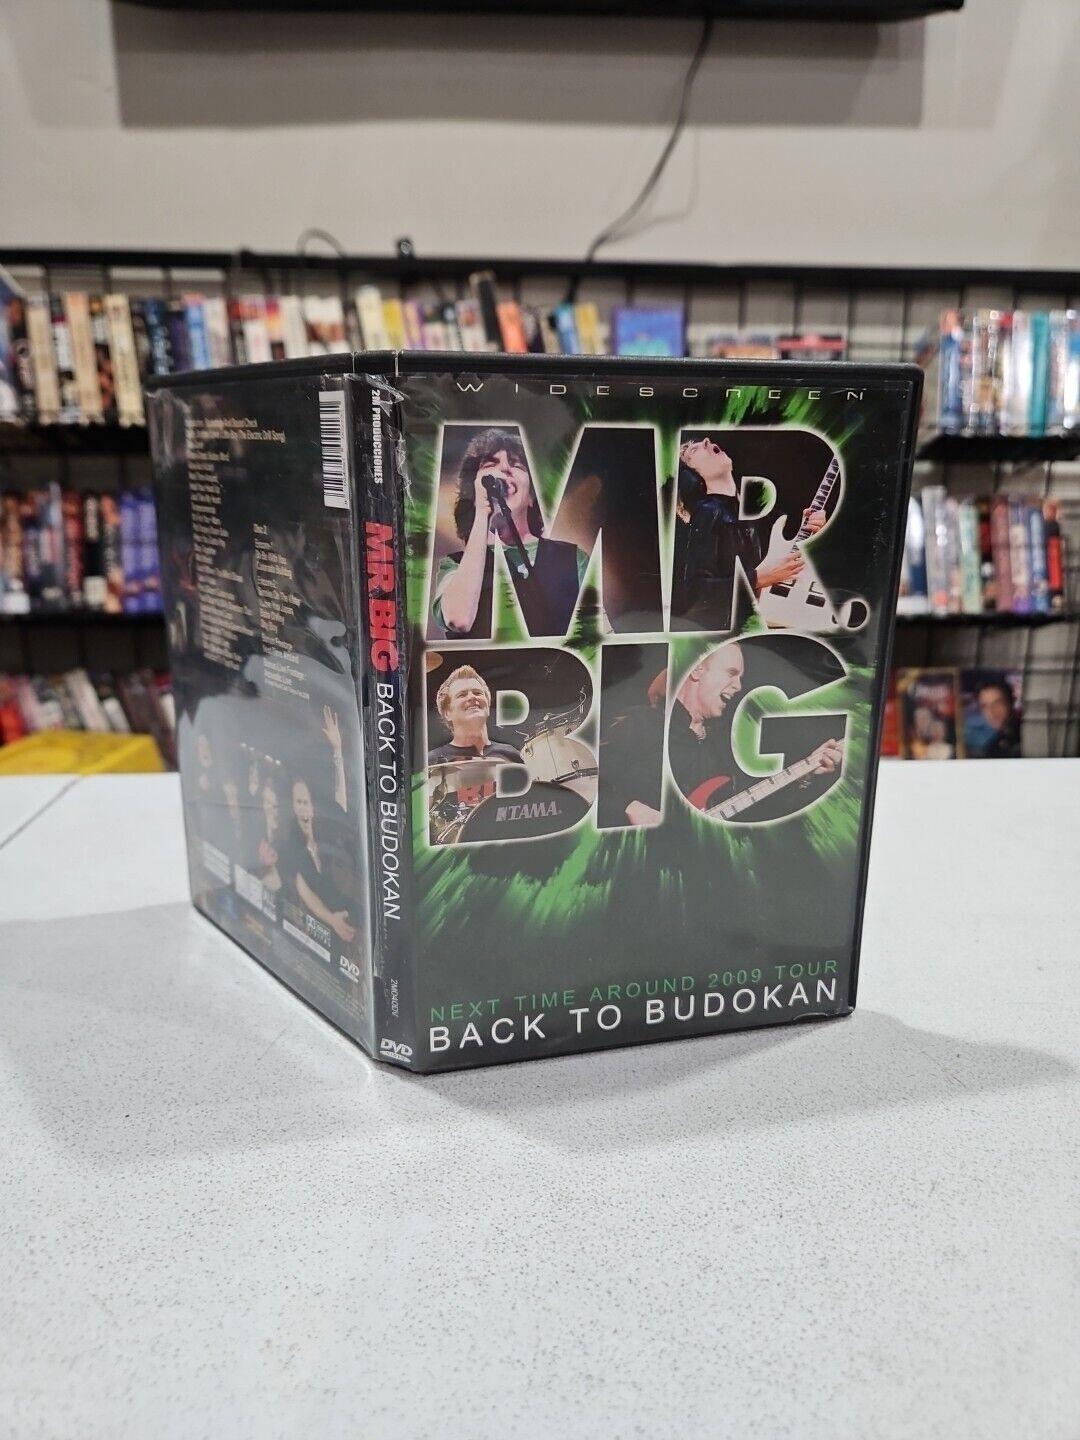 Mr Big - Back To Budokan Tour  [DVD, 2009] 📀 BUY 2 GET 1 FREE 🇺🇸 SHIPPED 